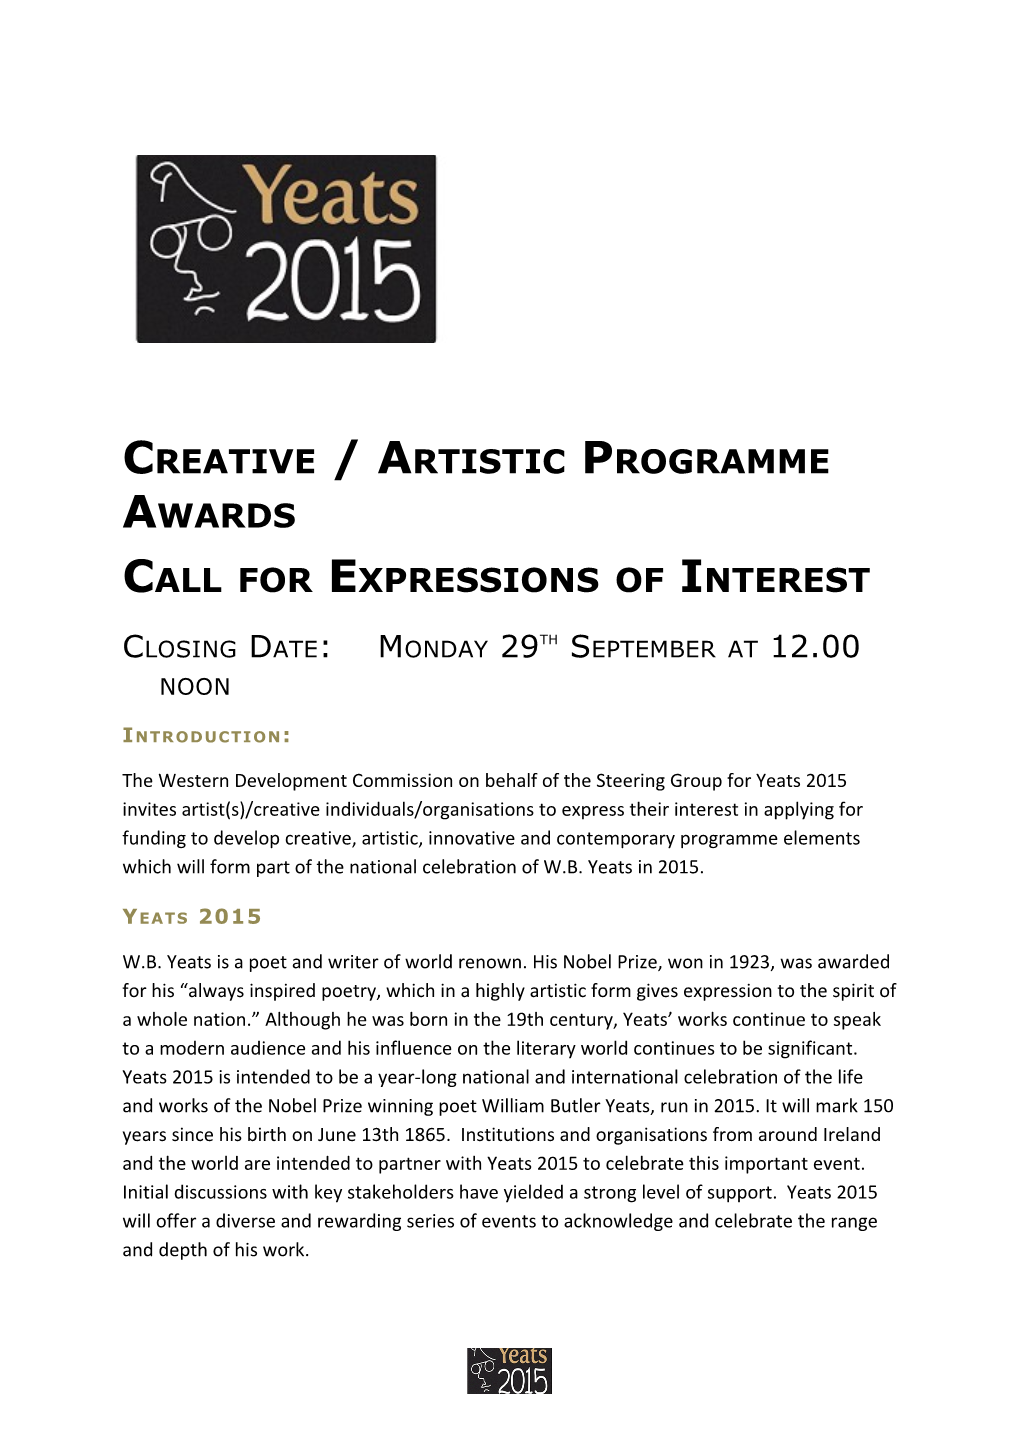 Creative / Artistic Programme Awards